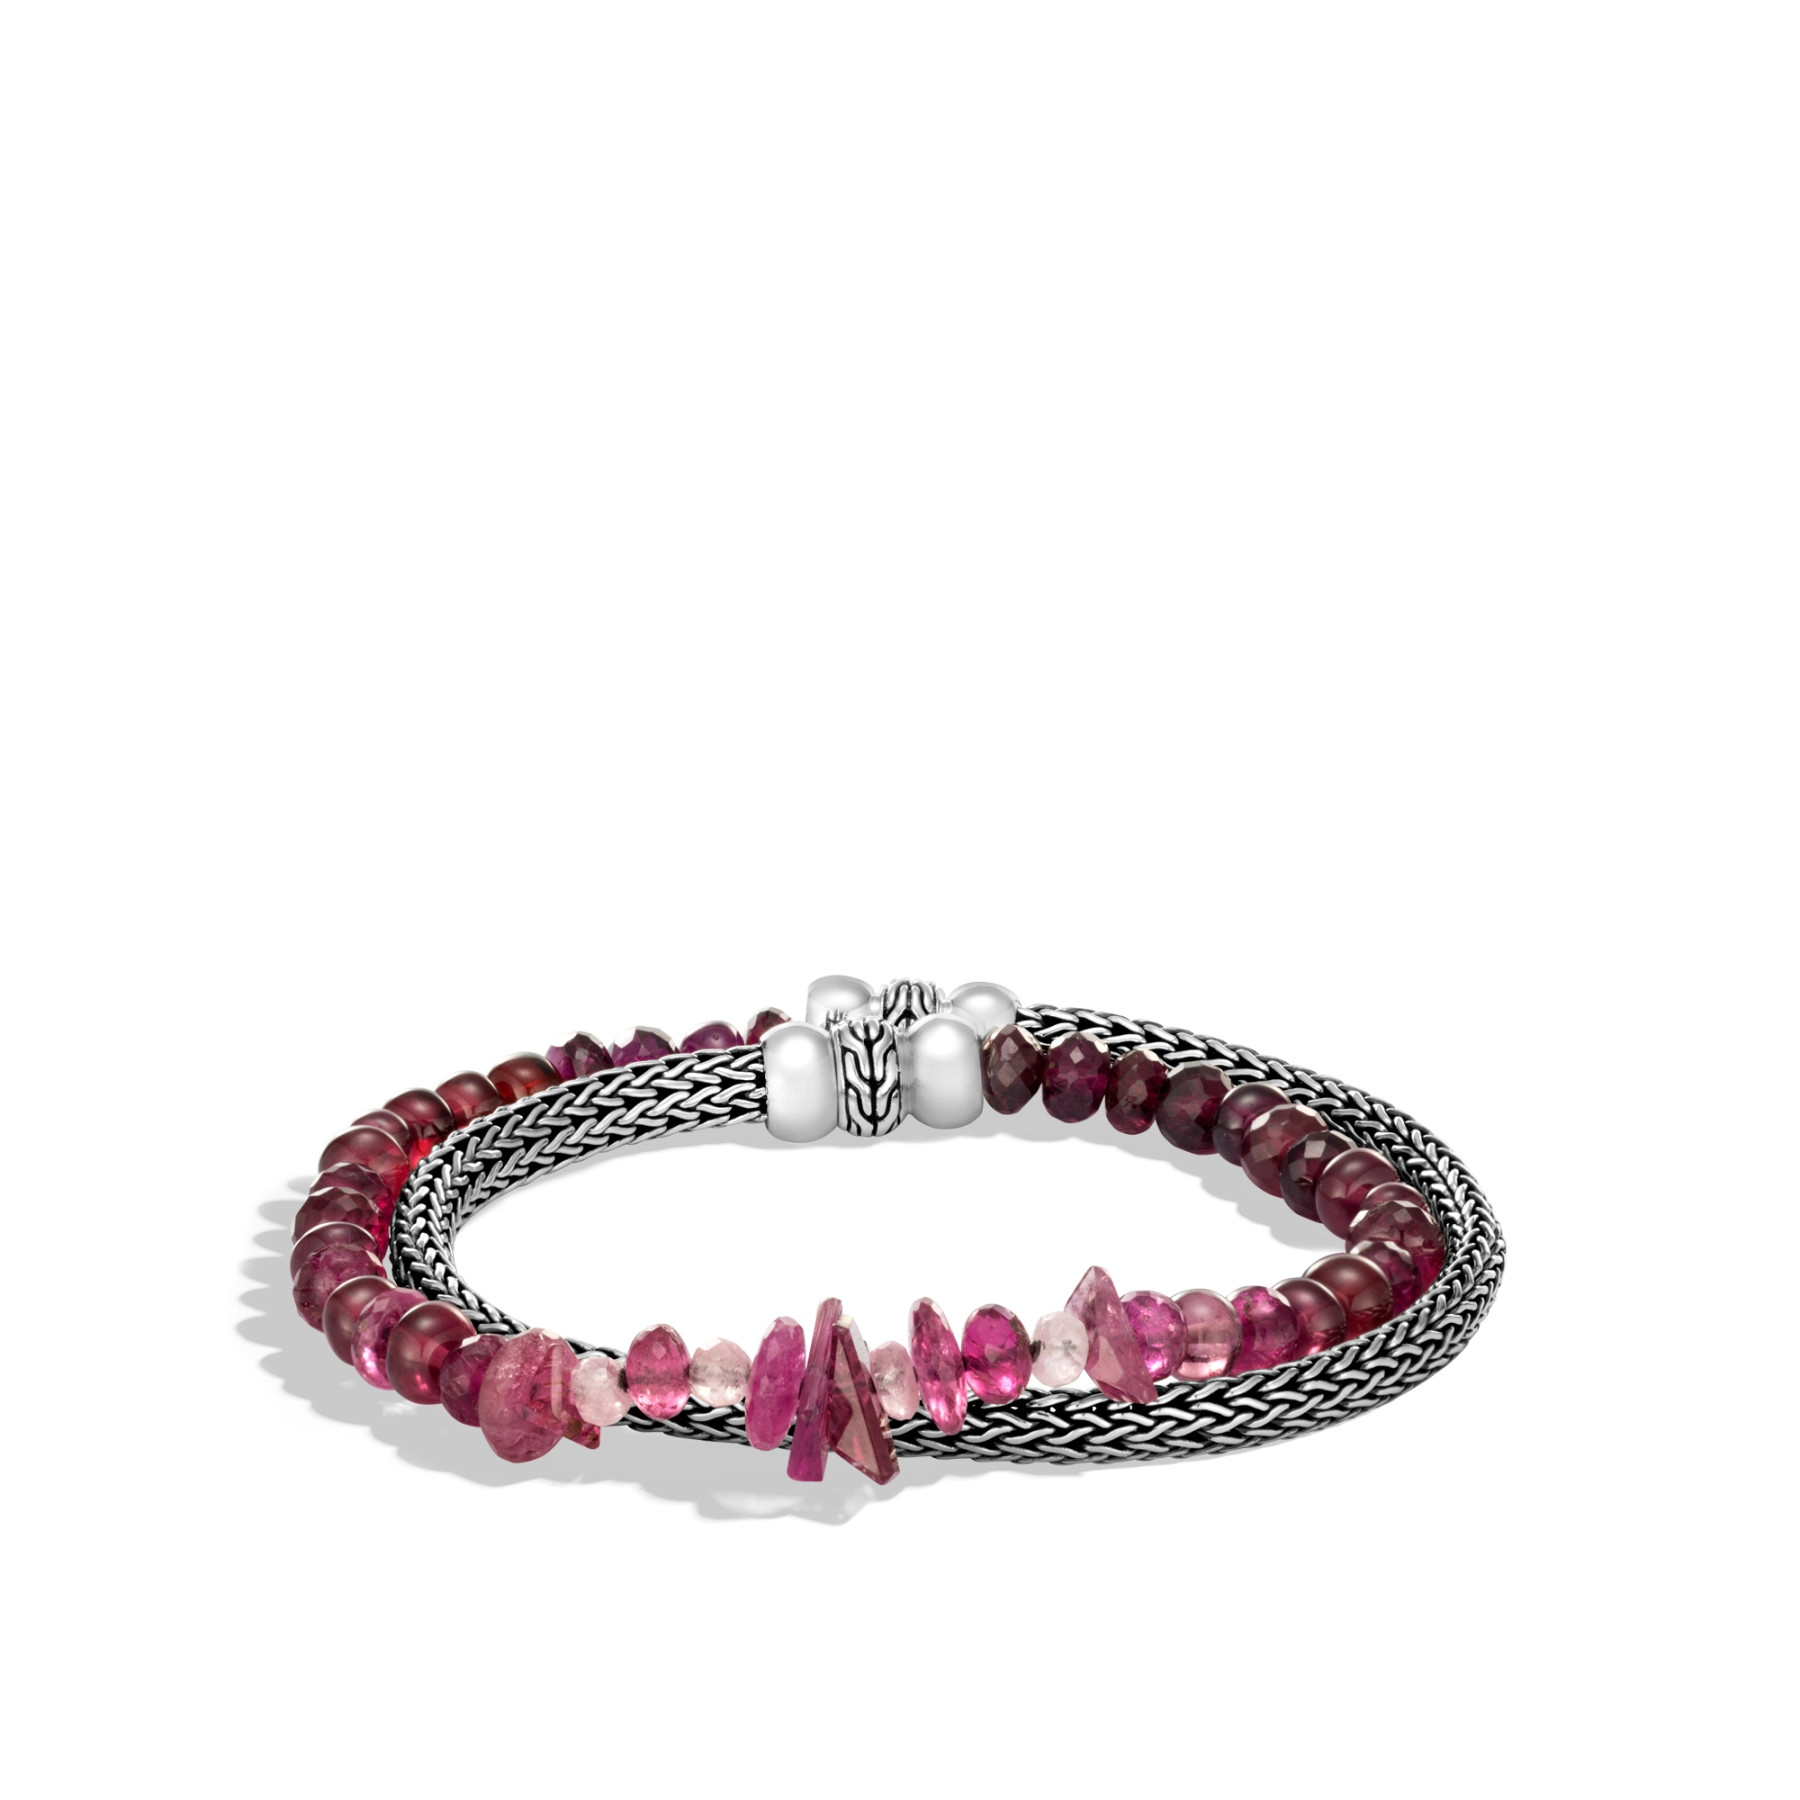 John Hardy Classic Chain Double Wrap Bracelet with Pink Tourmaline